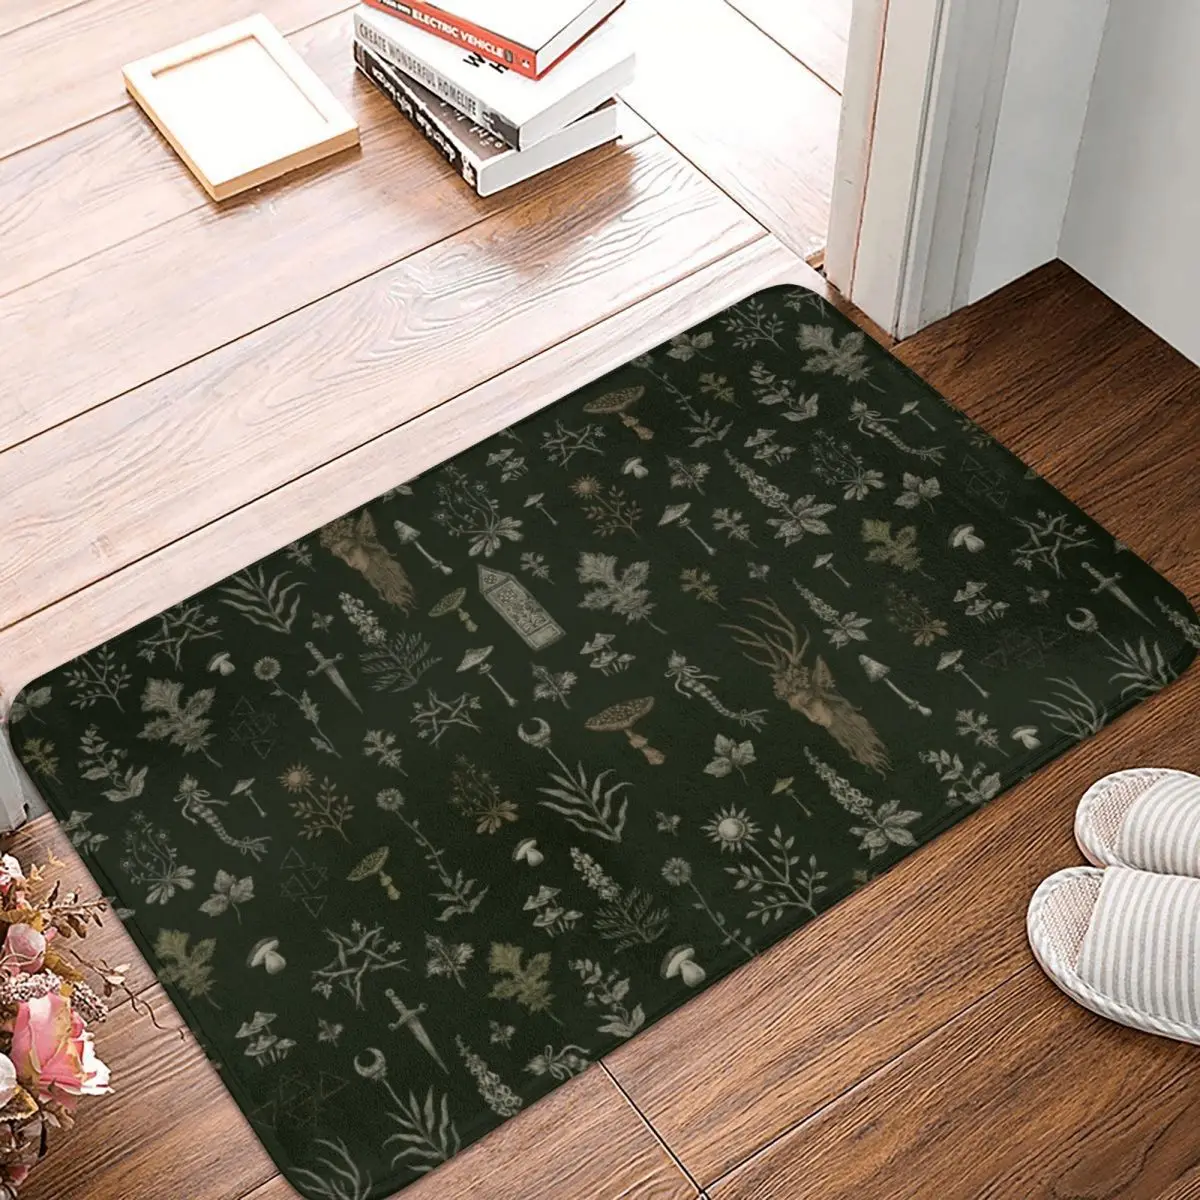 

Forest And Field Guardian Doormat Carpet Mat Rug Polyester Anti-slip Floor Decor Bath Bathroom Kitchen Bedroom 40*60